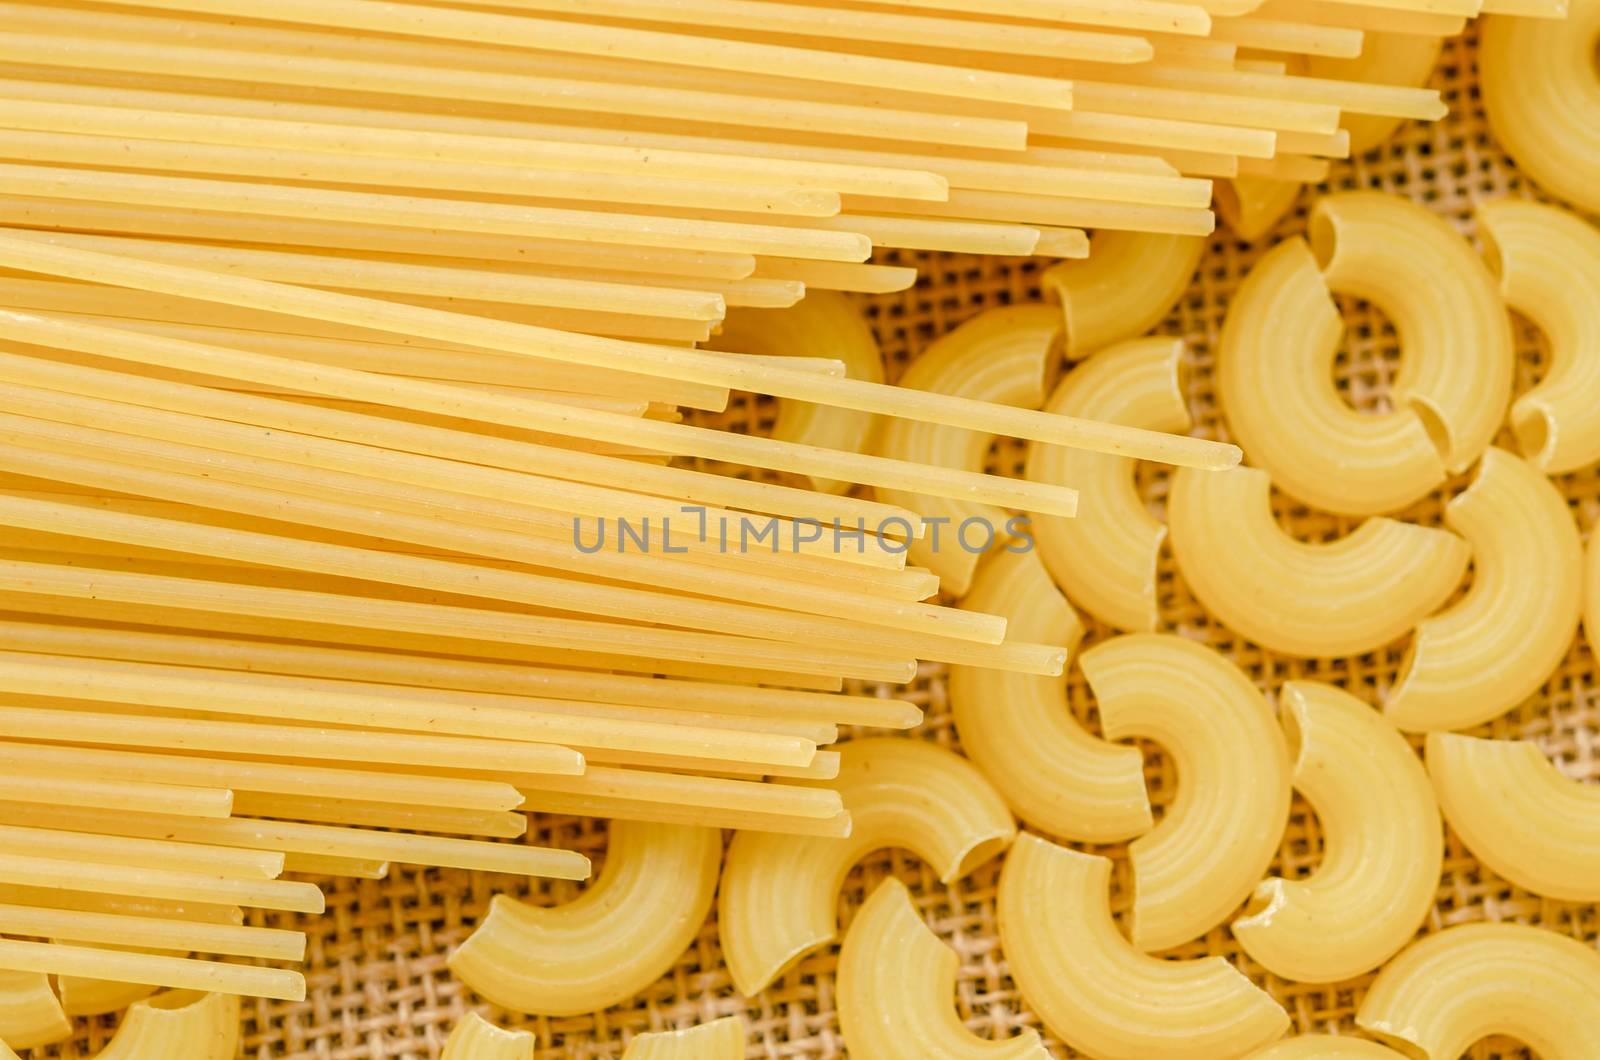 Raw spaghetti and Elbow macaroni. by Gamjai